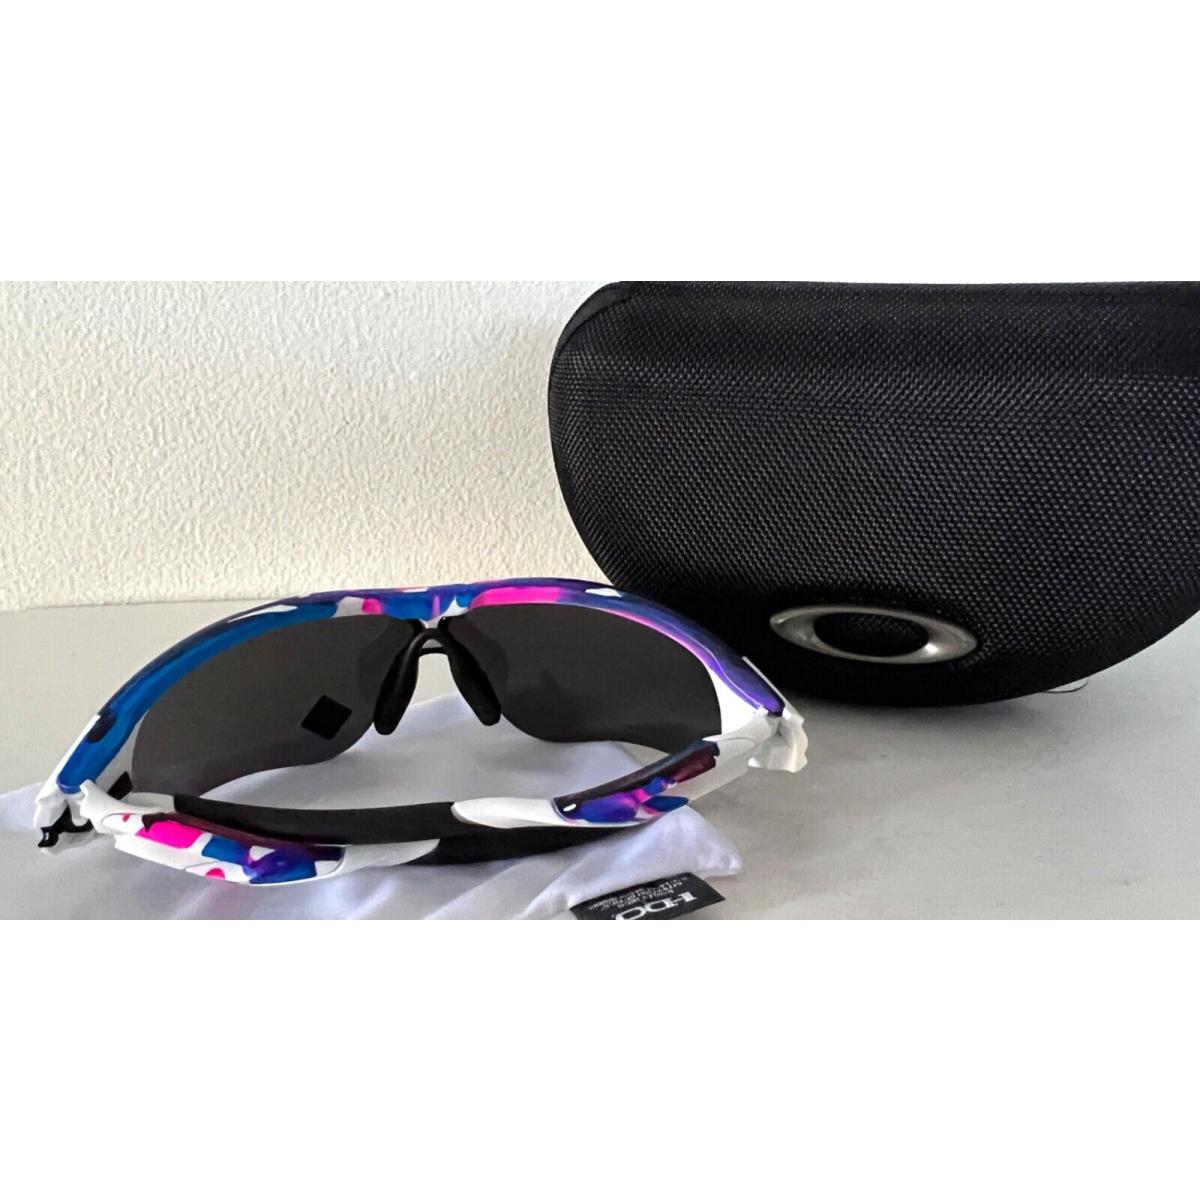 Oakley sunglasses Radarlock Path Asian Fit - Meguru Spin Frame, Prizm Black Lens